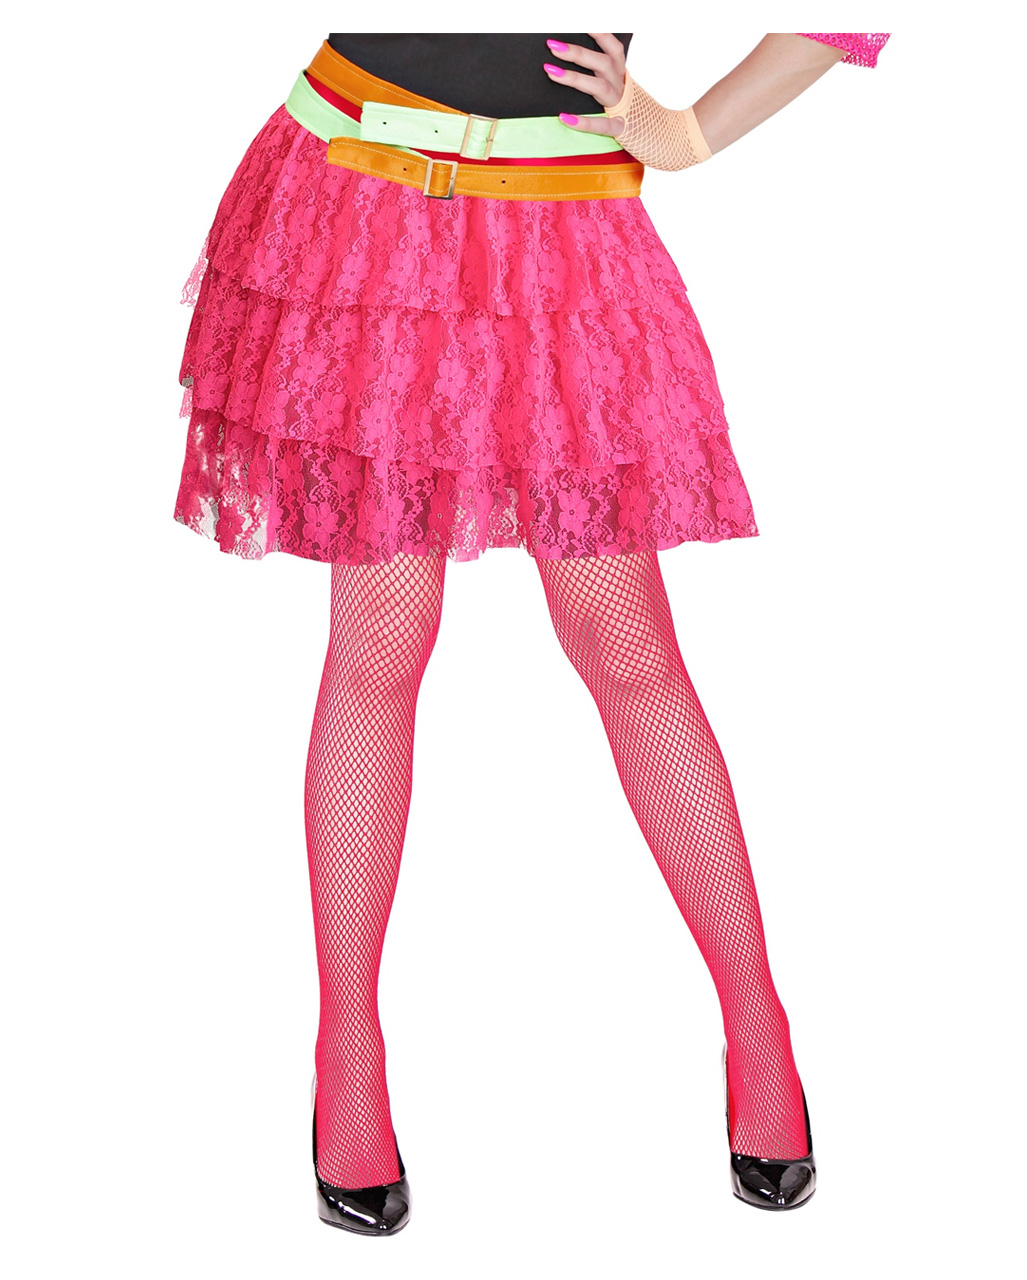 Neon Tutu Damenrock Petticoat Mini Rock 80er Jahre Mode Rüschen Minirock Kostüm 